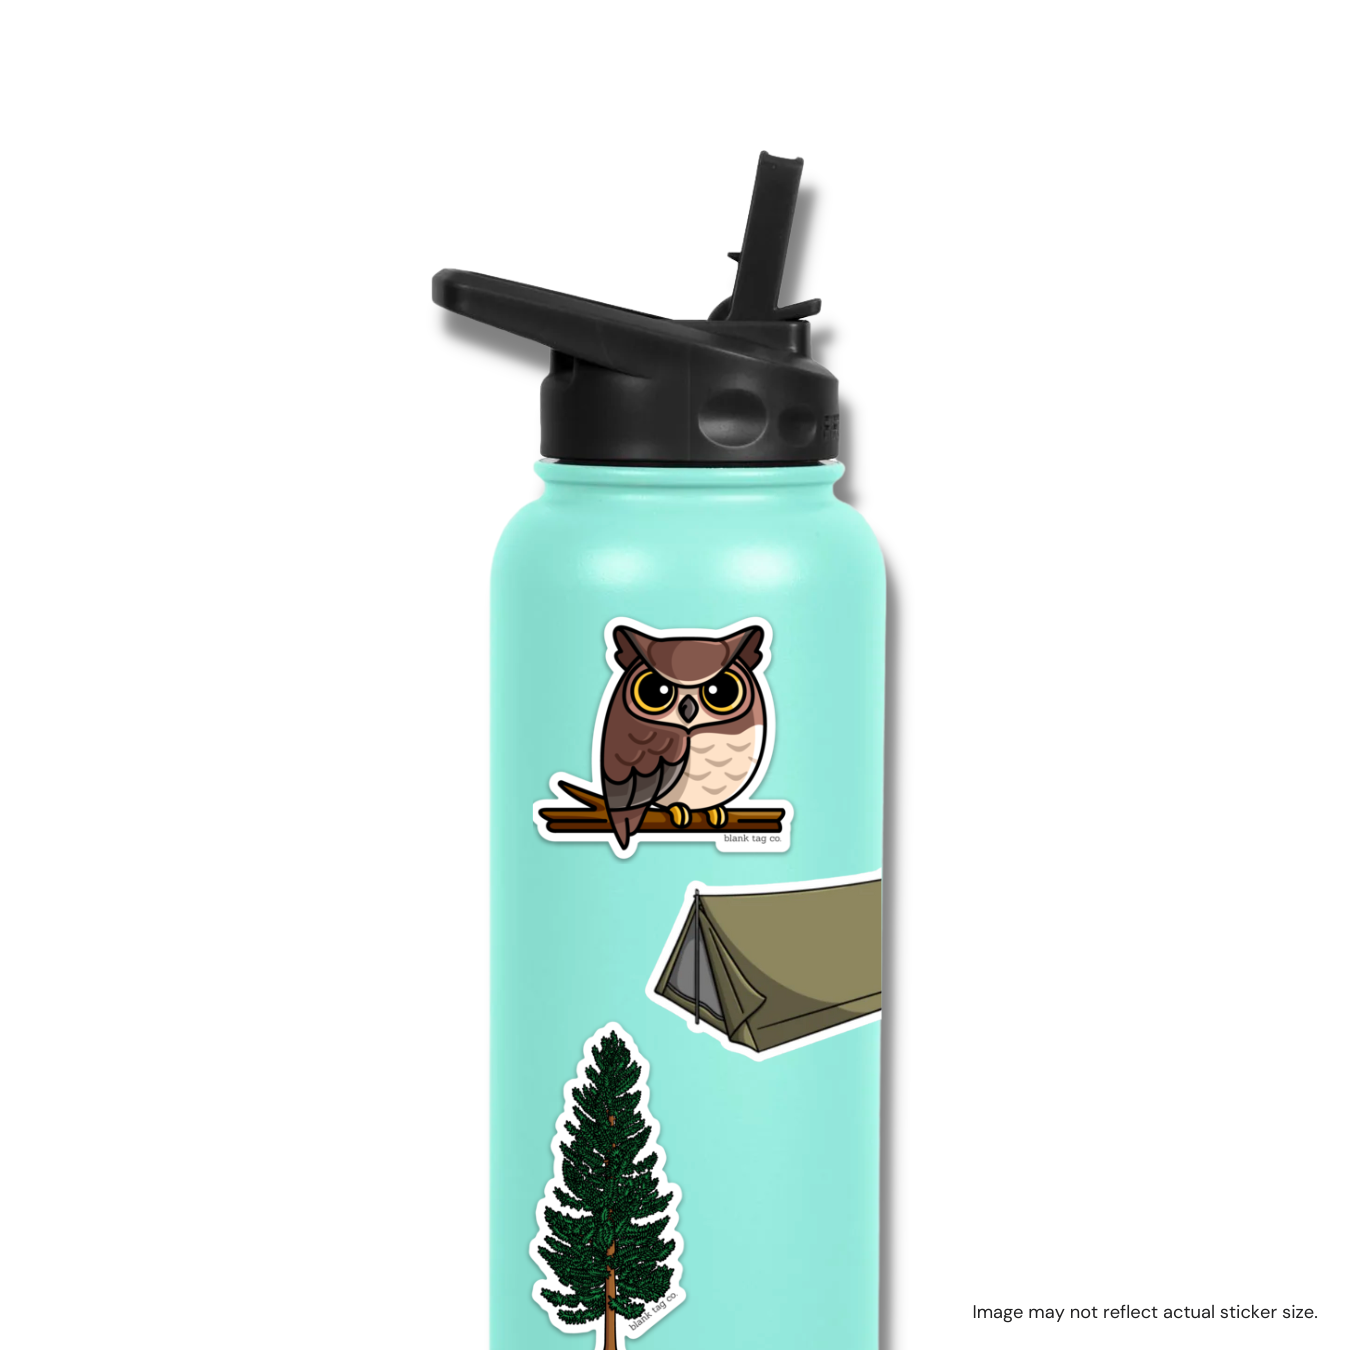 The Pine Tree Sticker